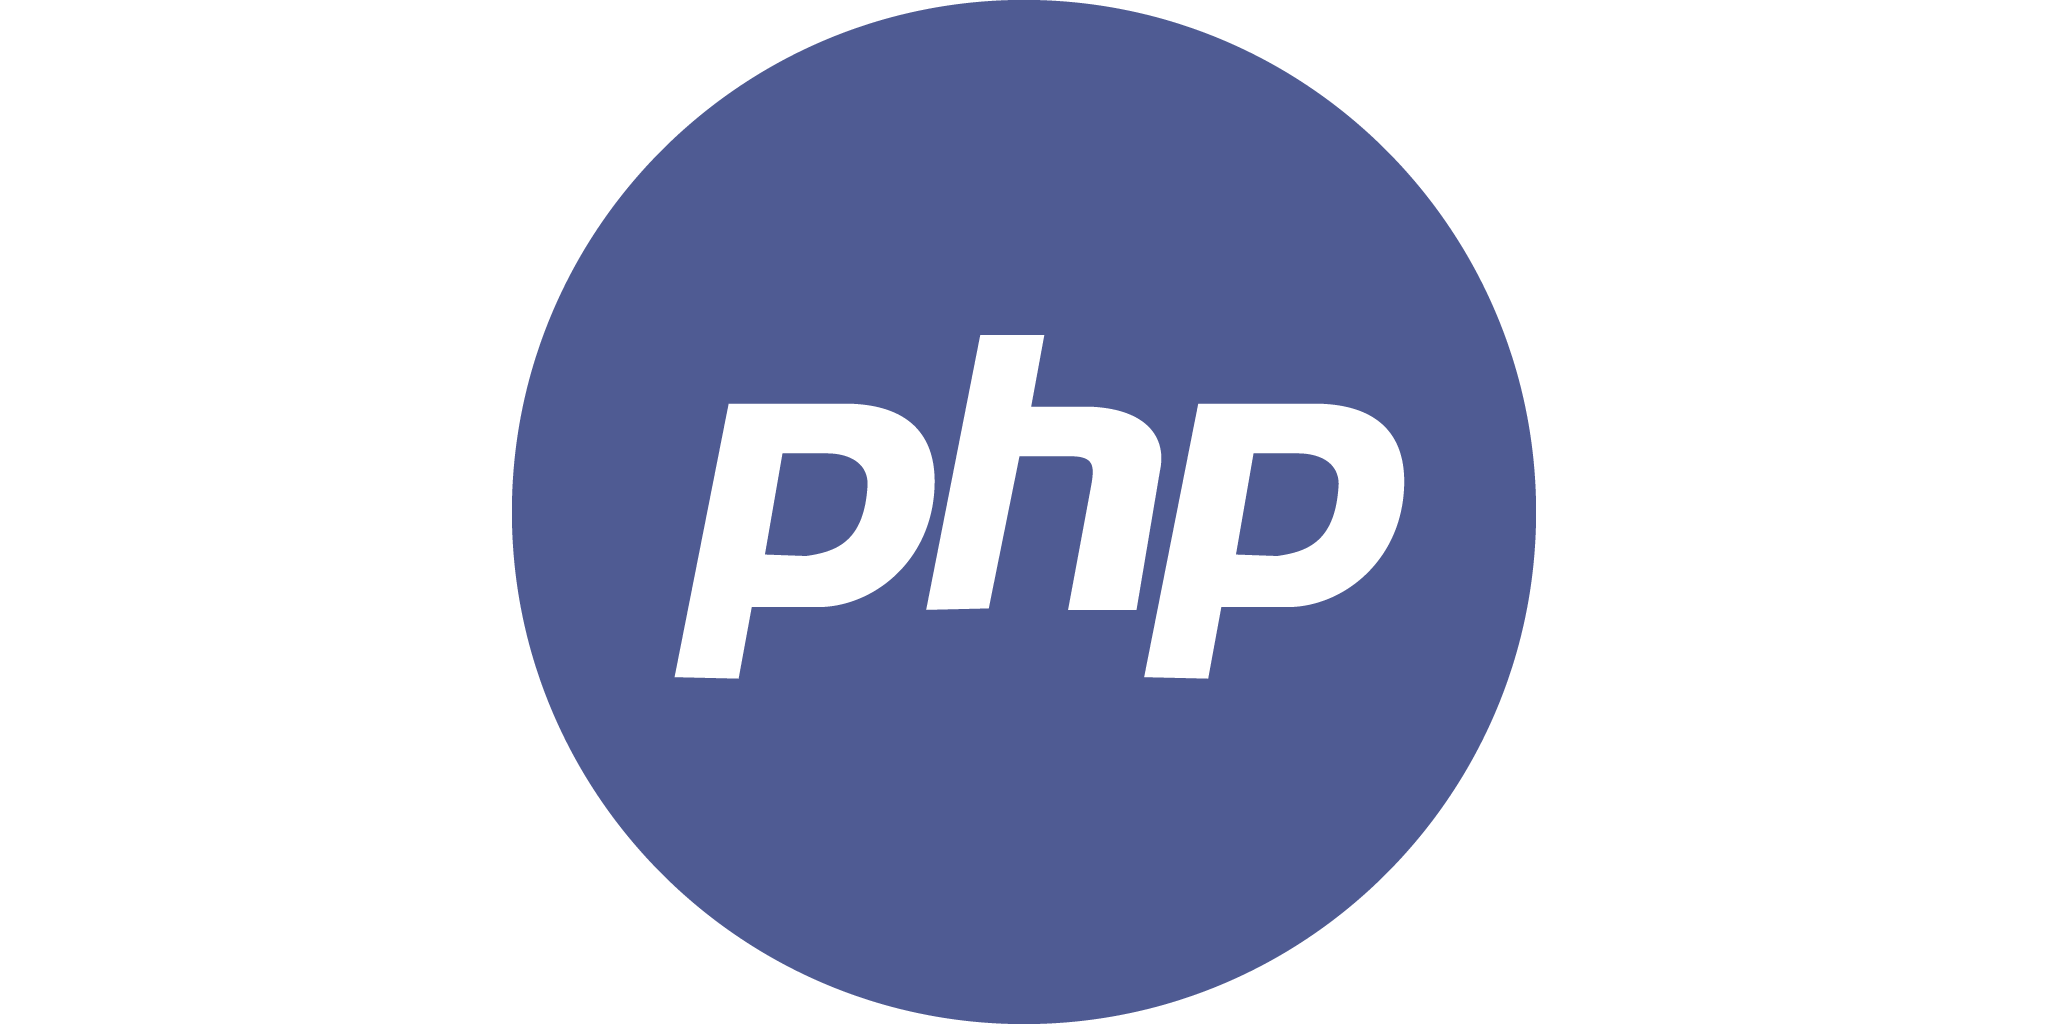 PHP-Development